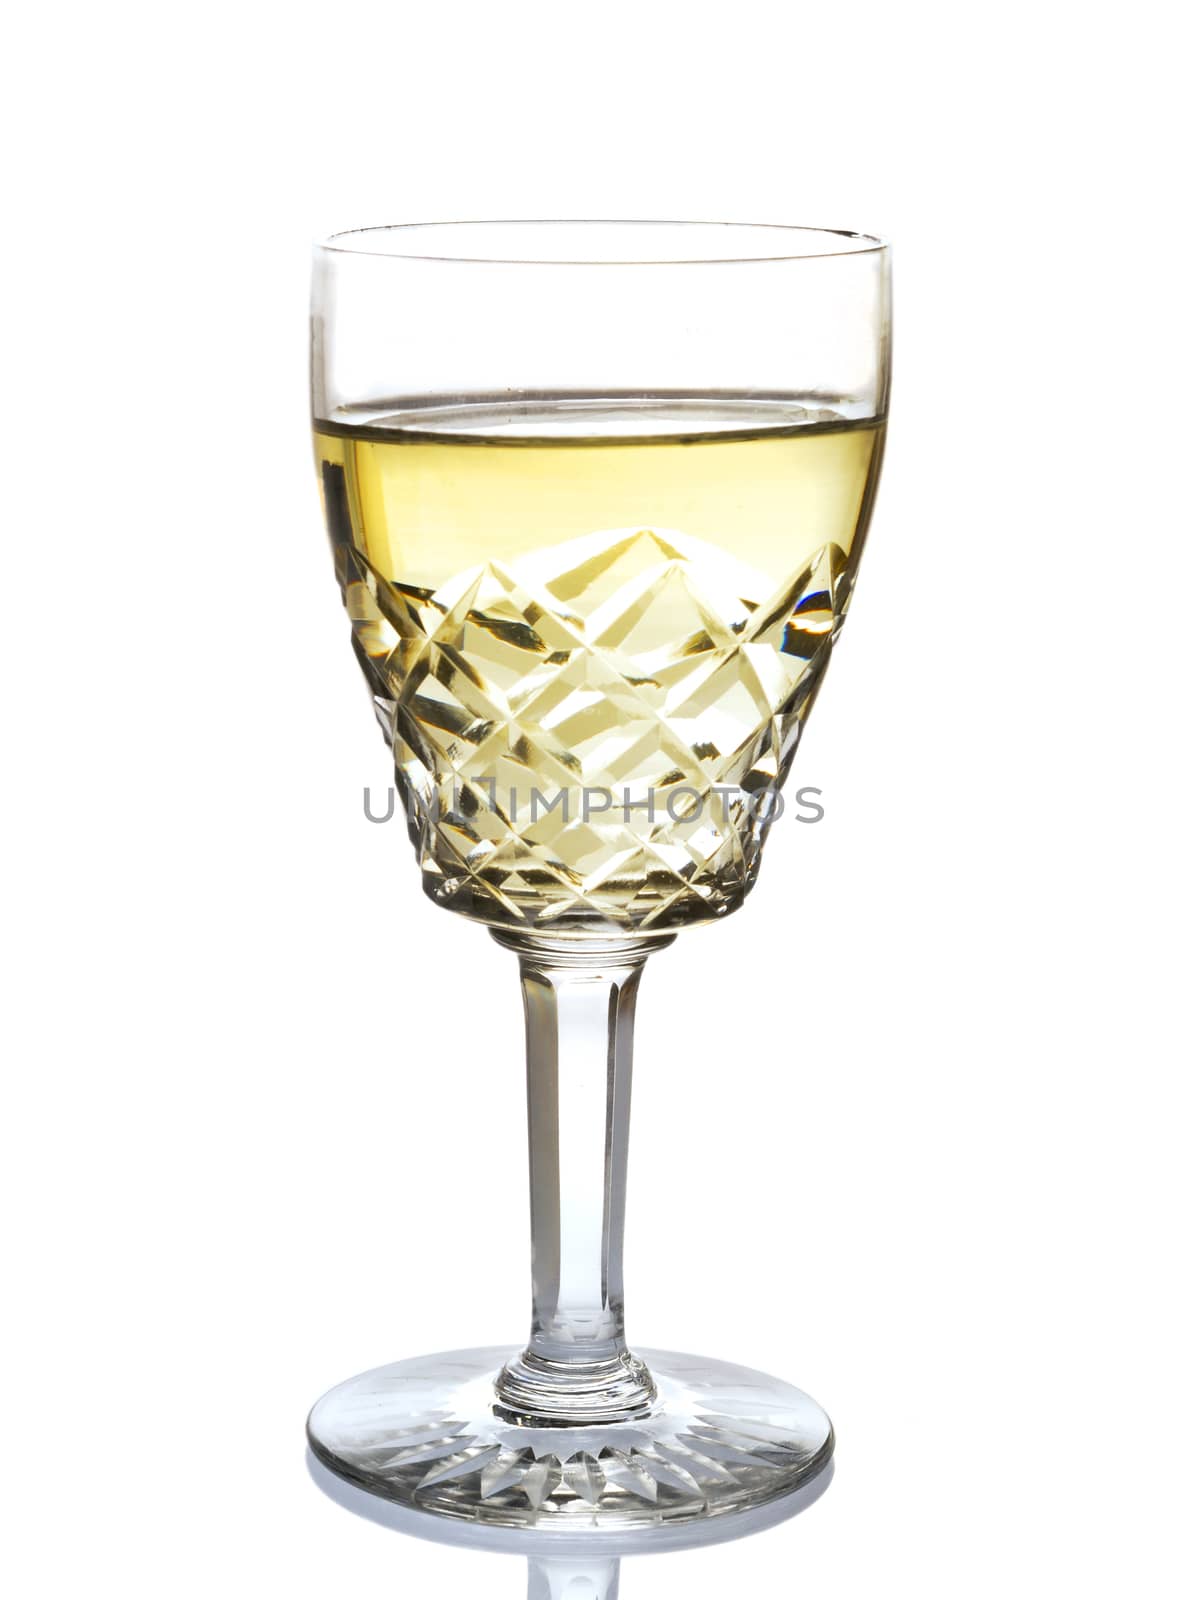 Wine glass, crystal, white wine, white background by jalonsohu@gmail.com